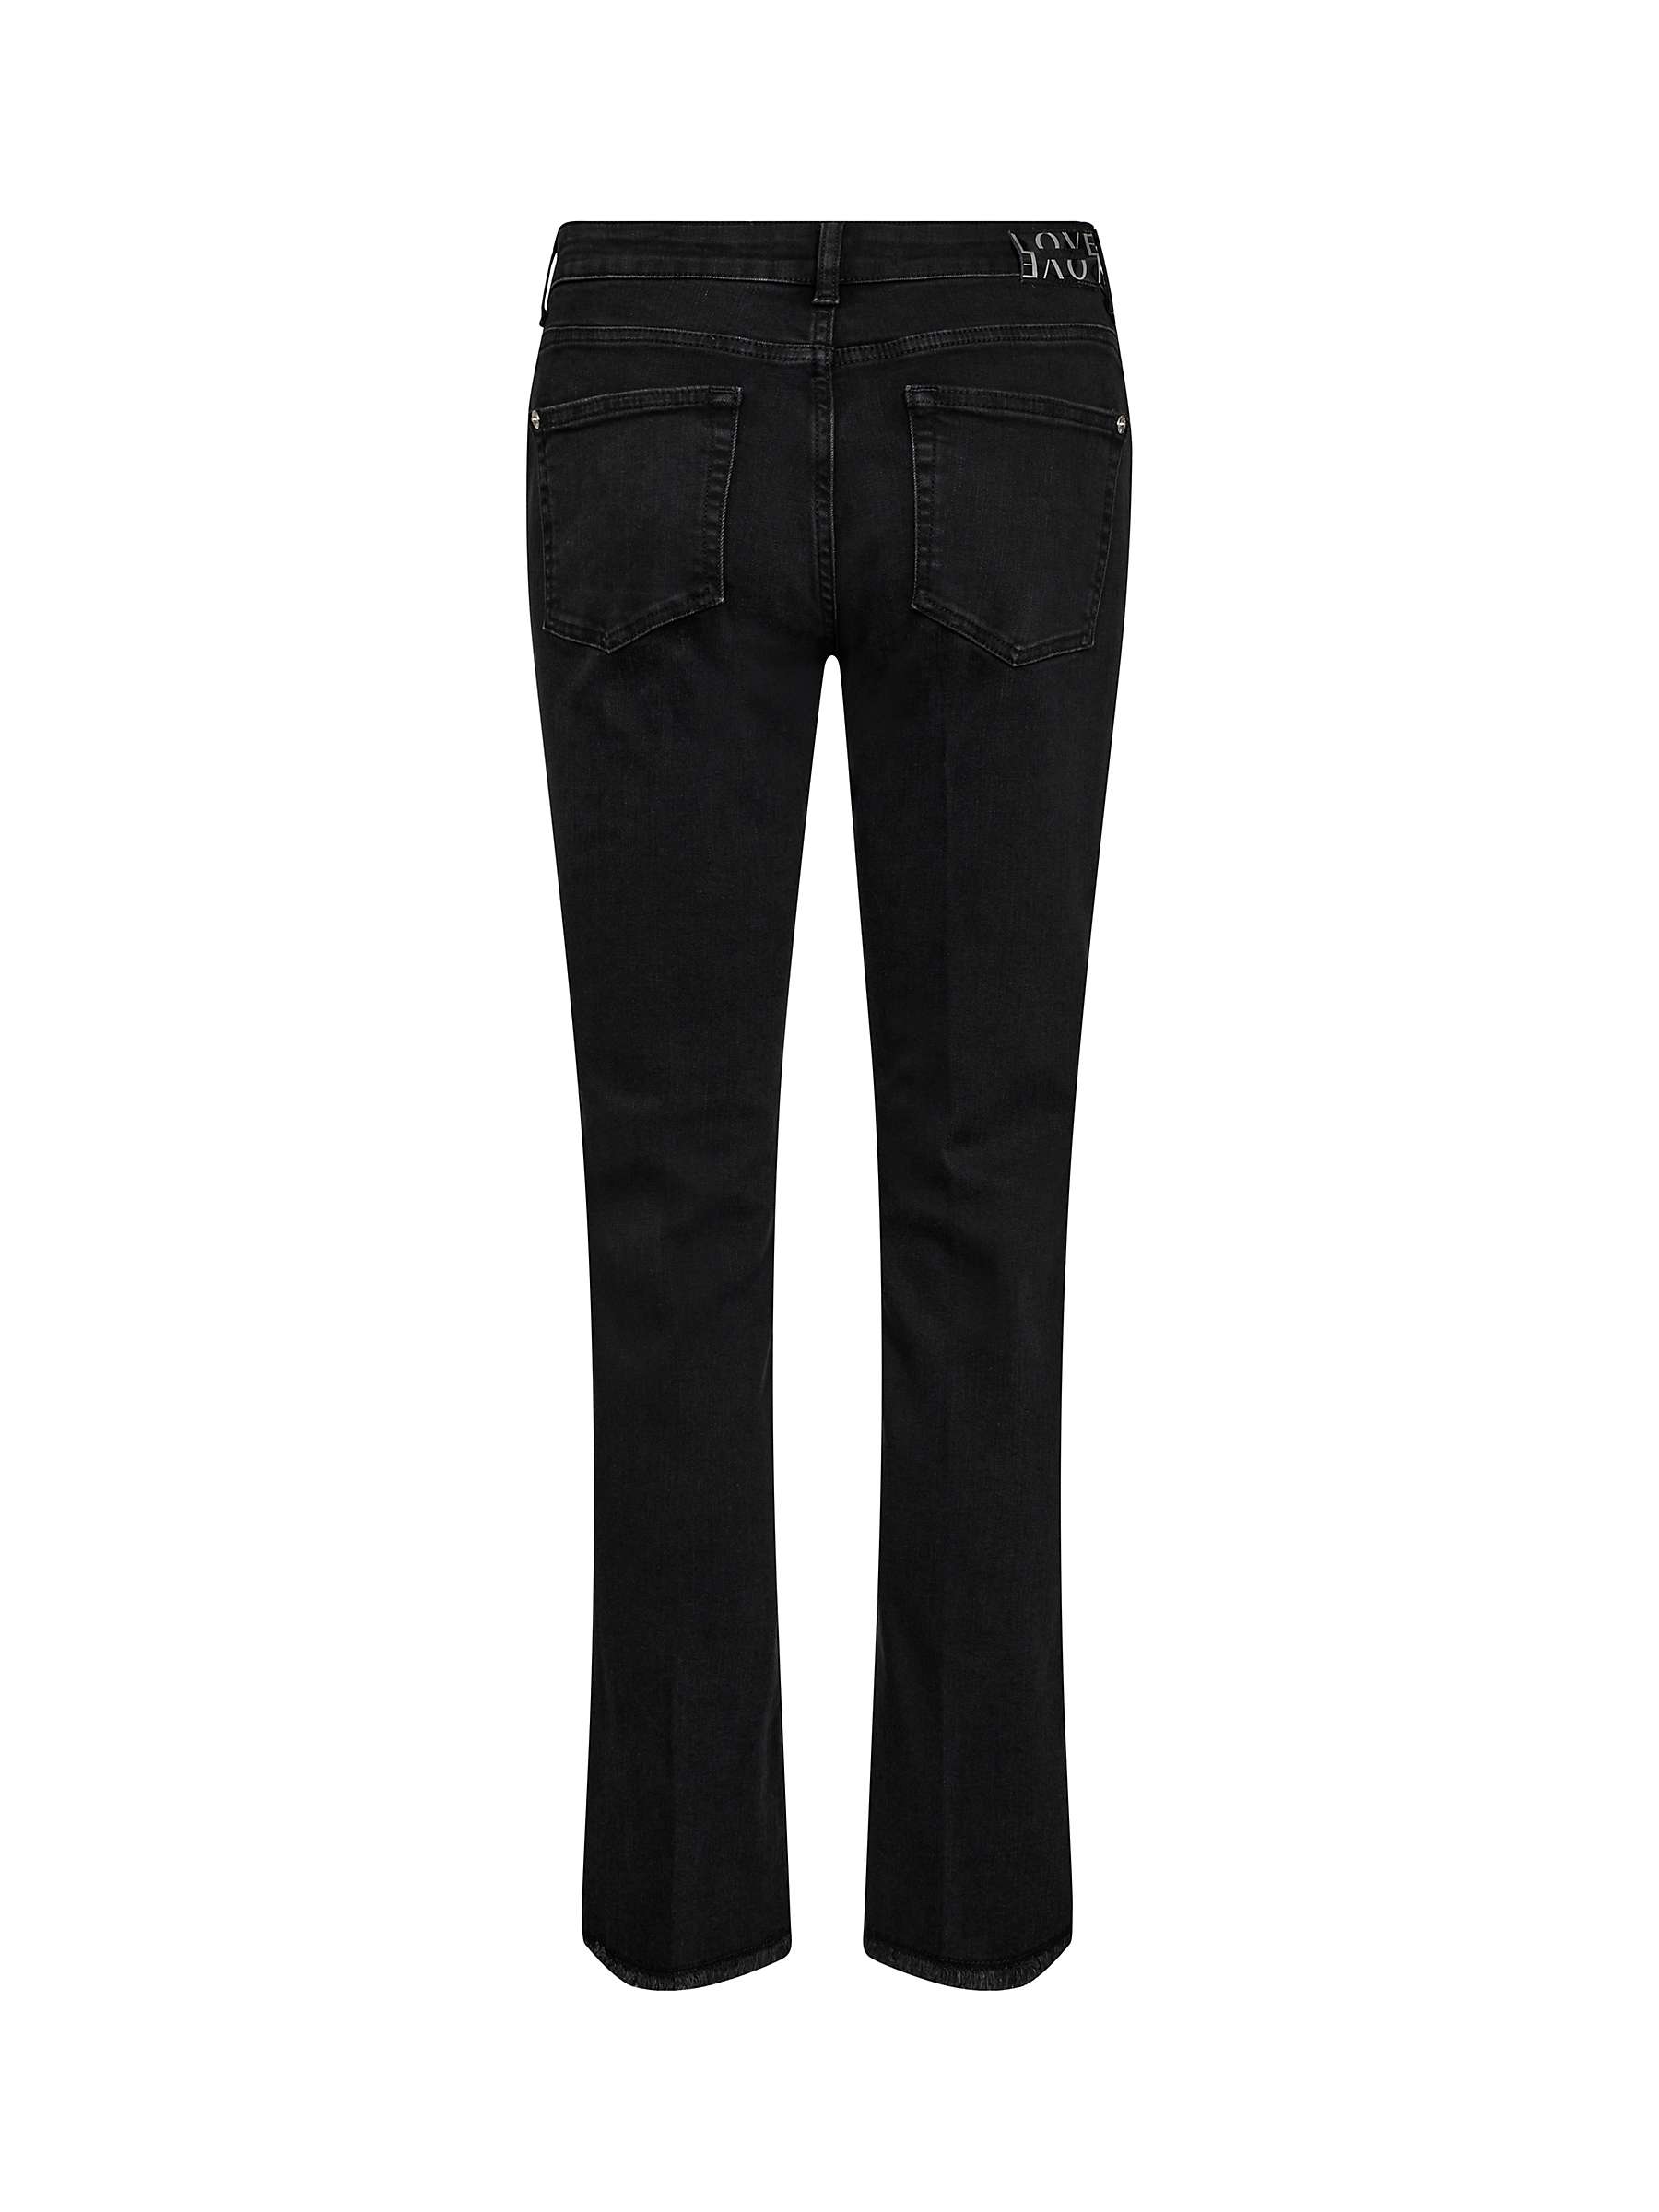 MOS MOSH Ashley Imera Flared Jeans, Black at John Lewis & Partners